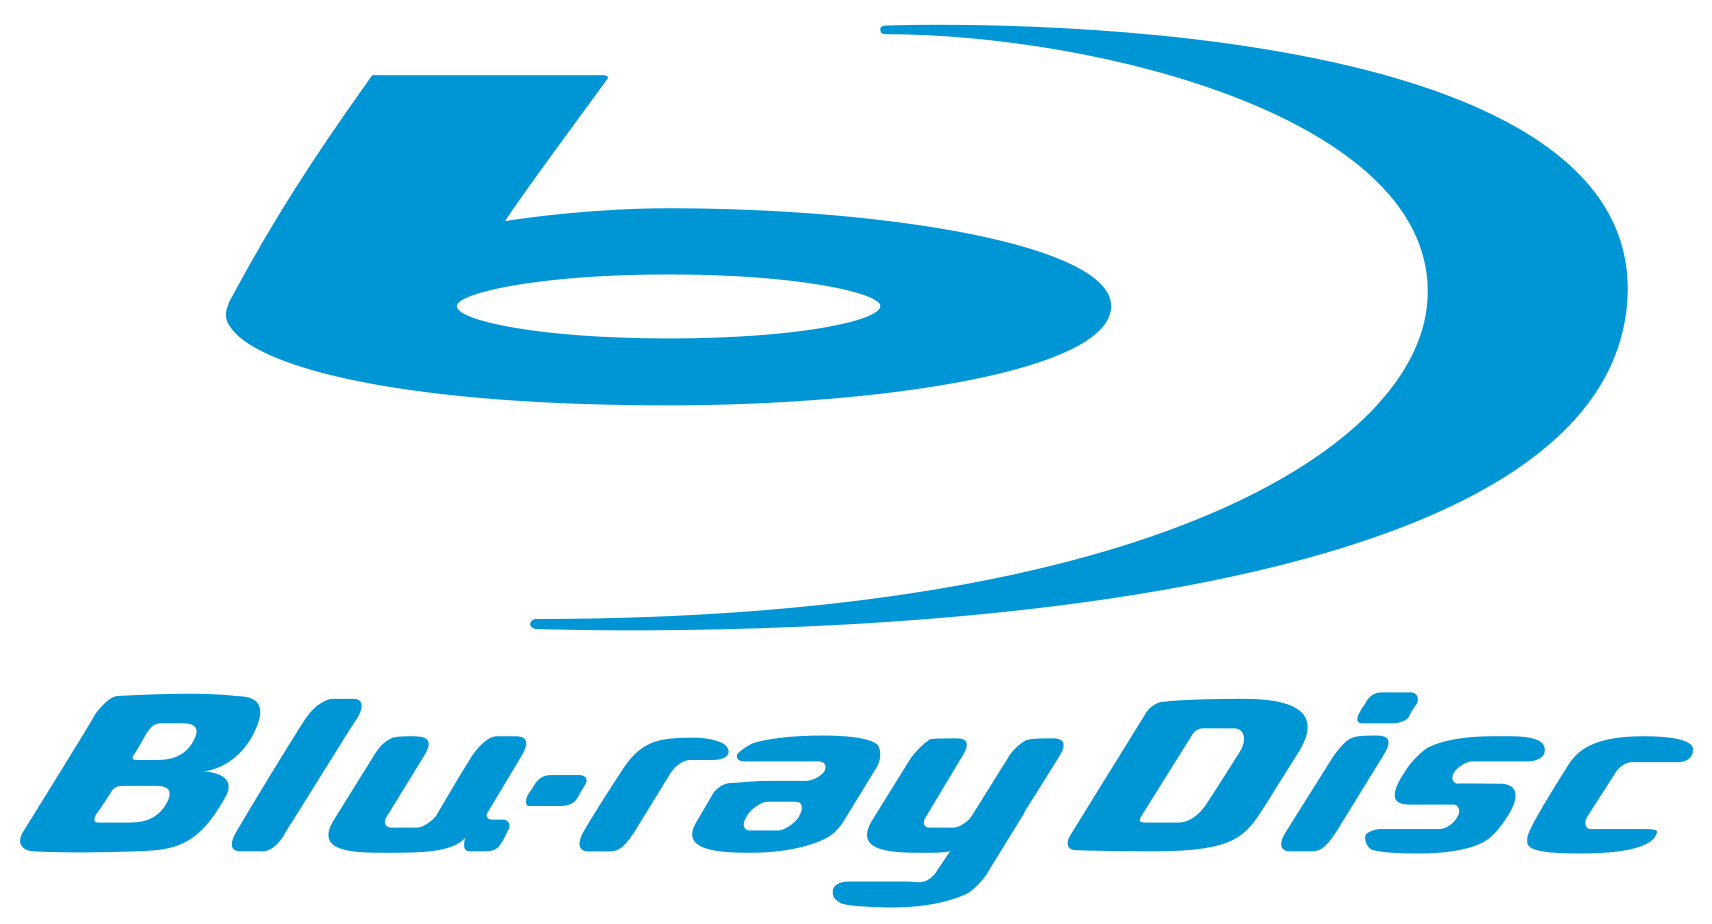 Blu-ray Disc Logo - File:Blu ray logo.png - Wikimedia Commons